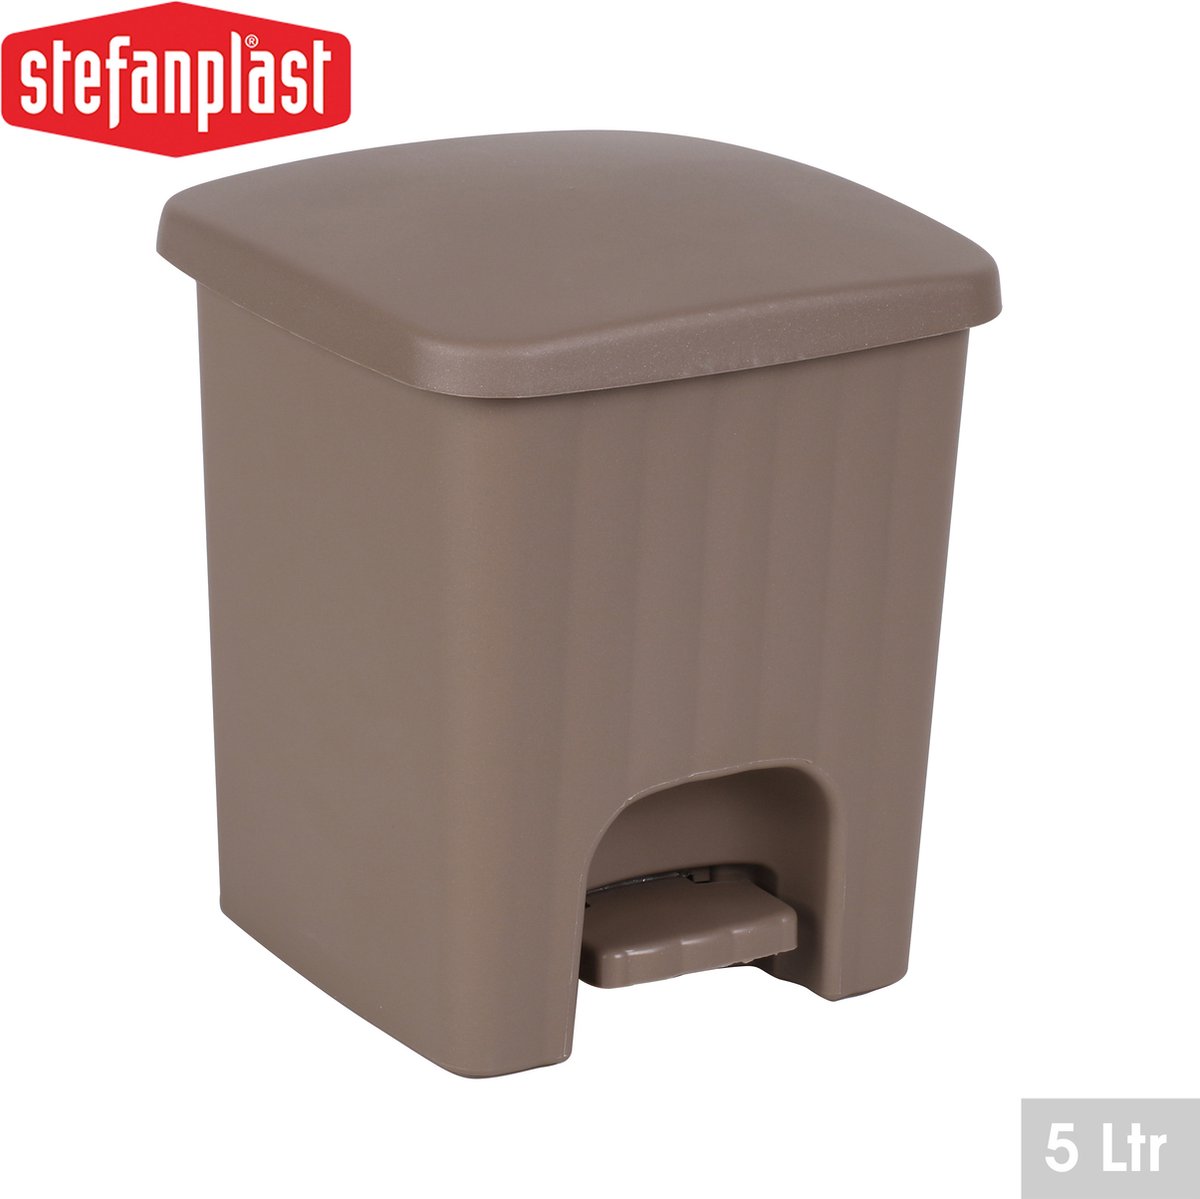 Stefanplast prullenbak - vuilbak - prullenbak badkamer - prullenbak met pedaal plastiek - 5l taupe